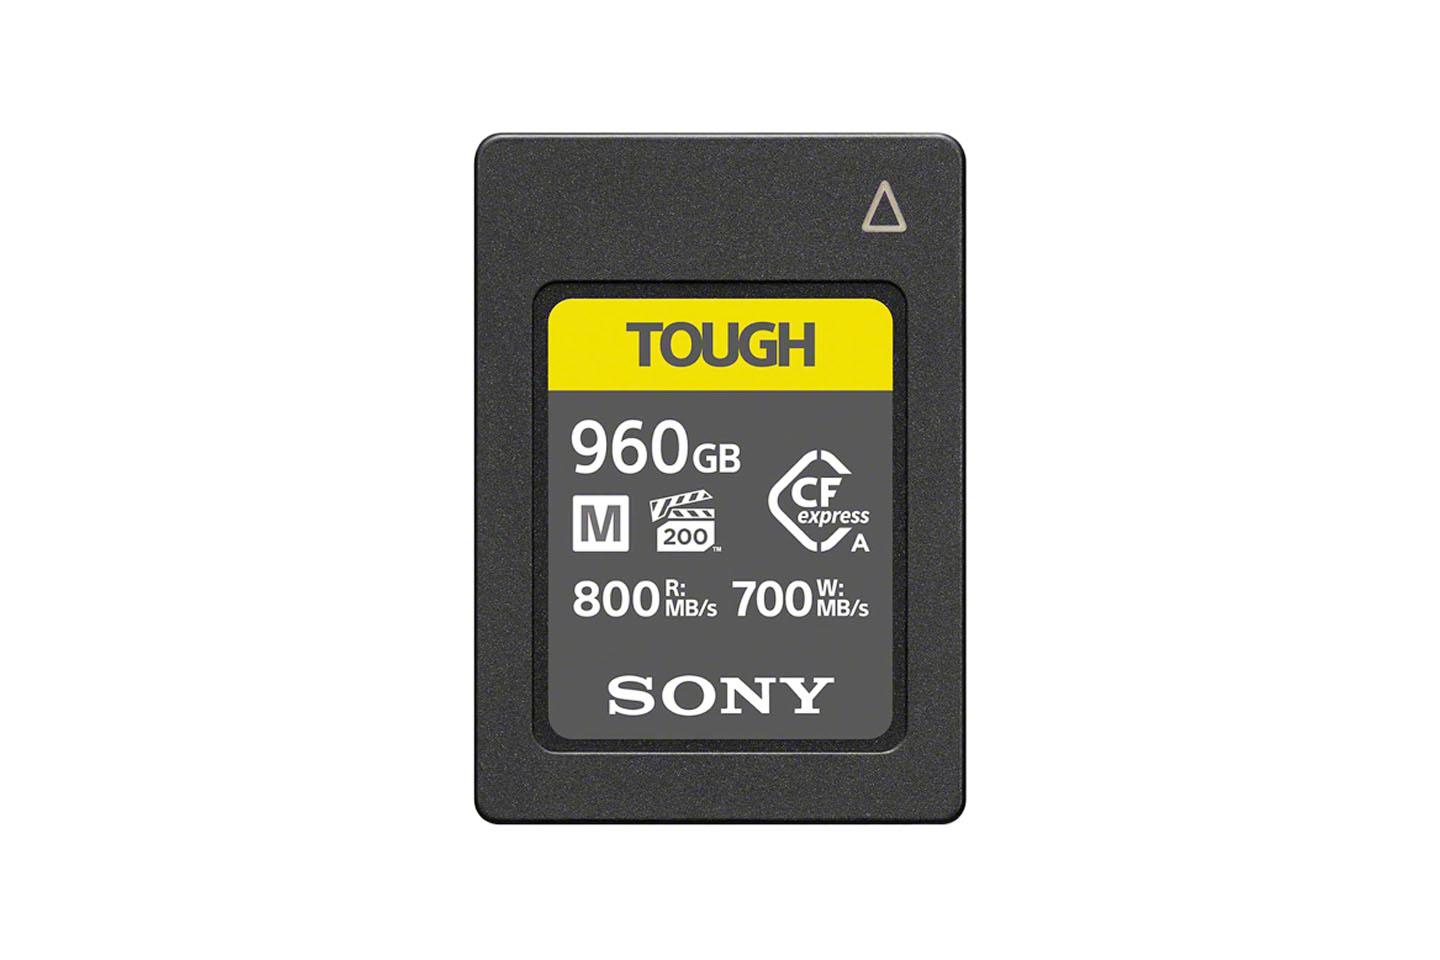 CFexpressTypeAカード960GB(SONY Tough M)